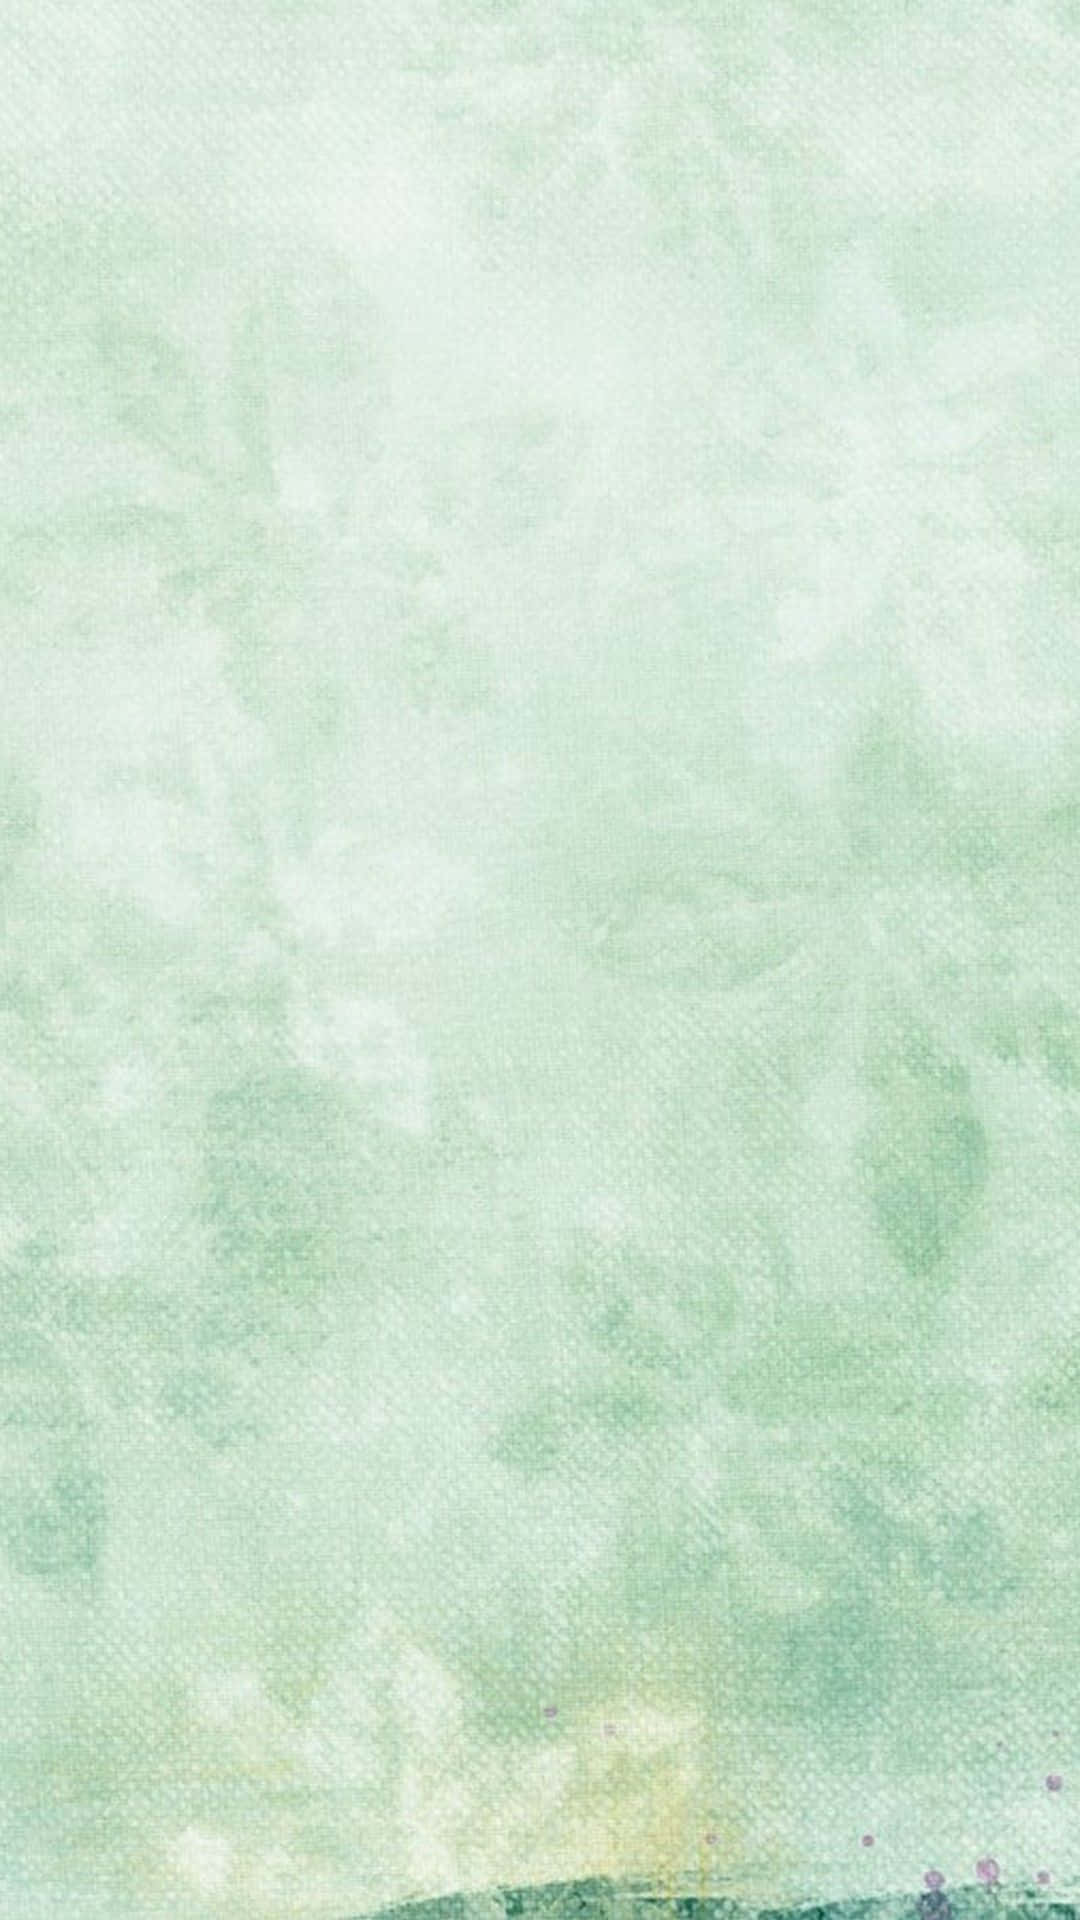 Mint Textured Background Wallpaper